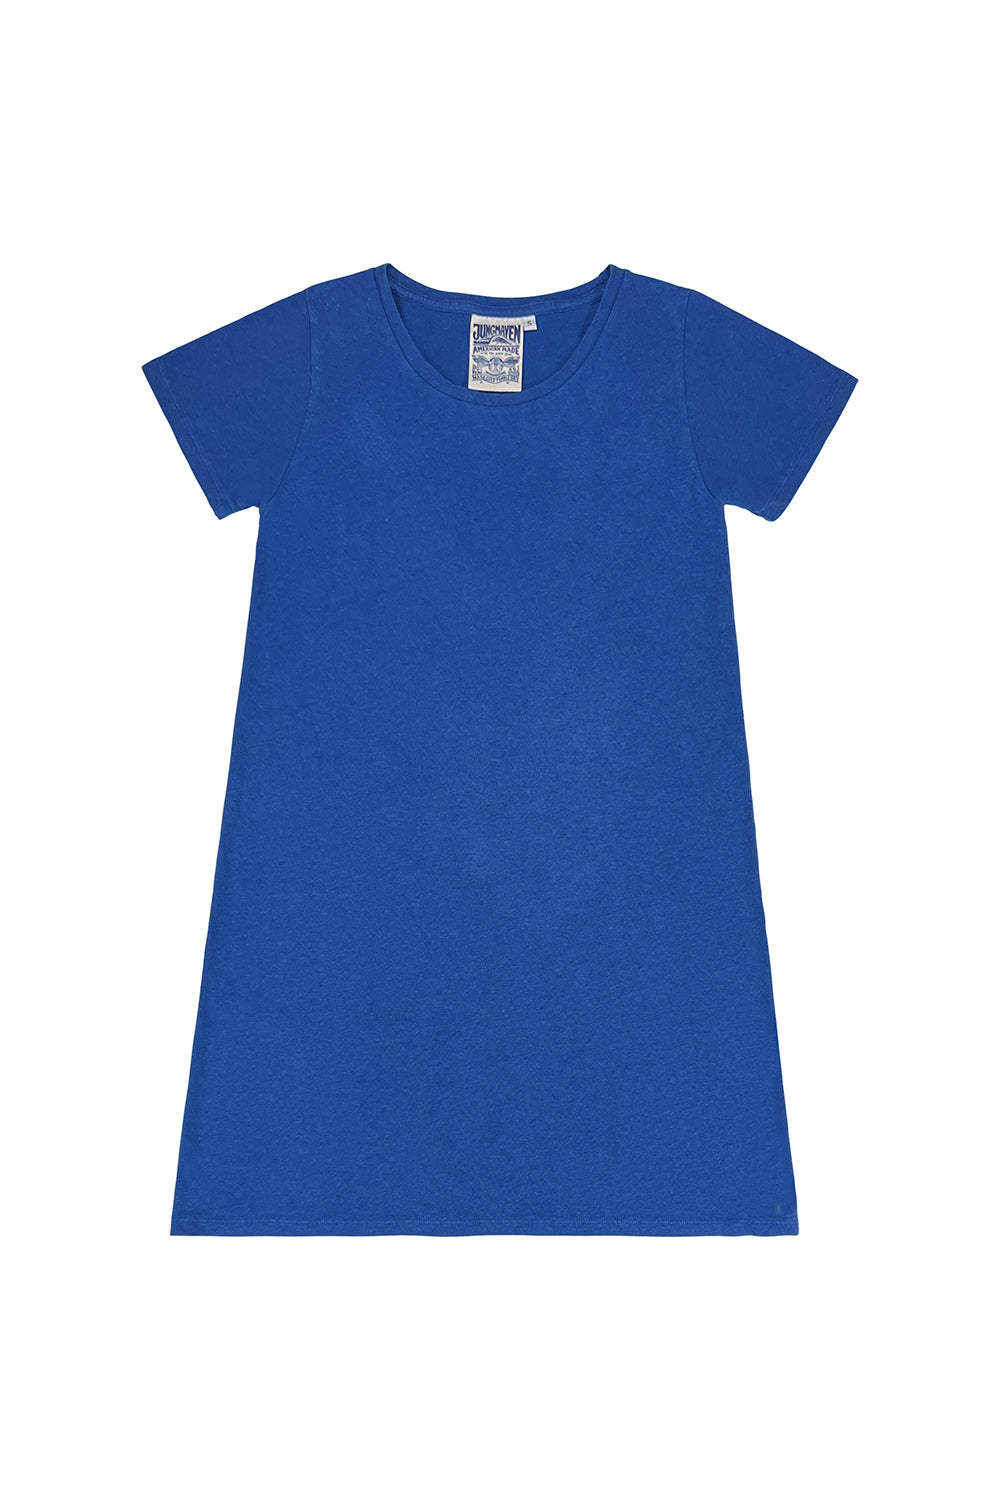 Rae Line Dress | Jungmaven Hemp Clothing & Accessories / Color: Galaxy Blue